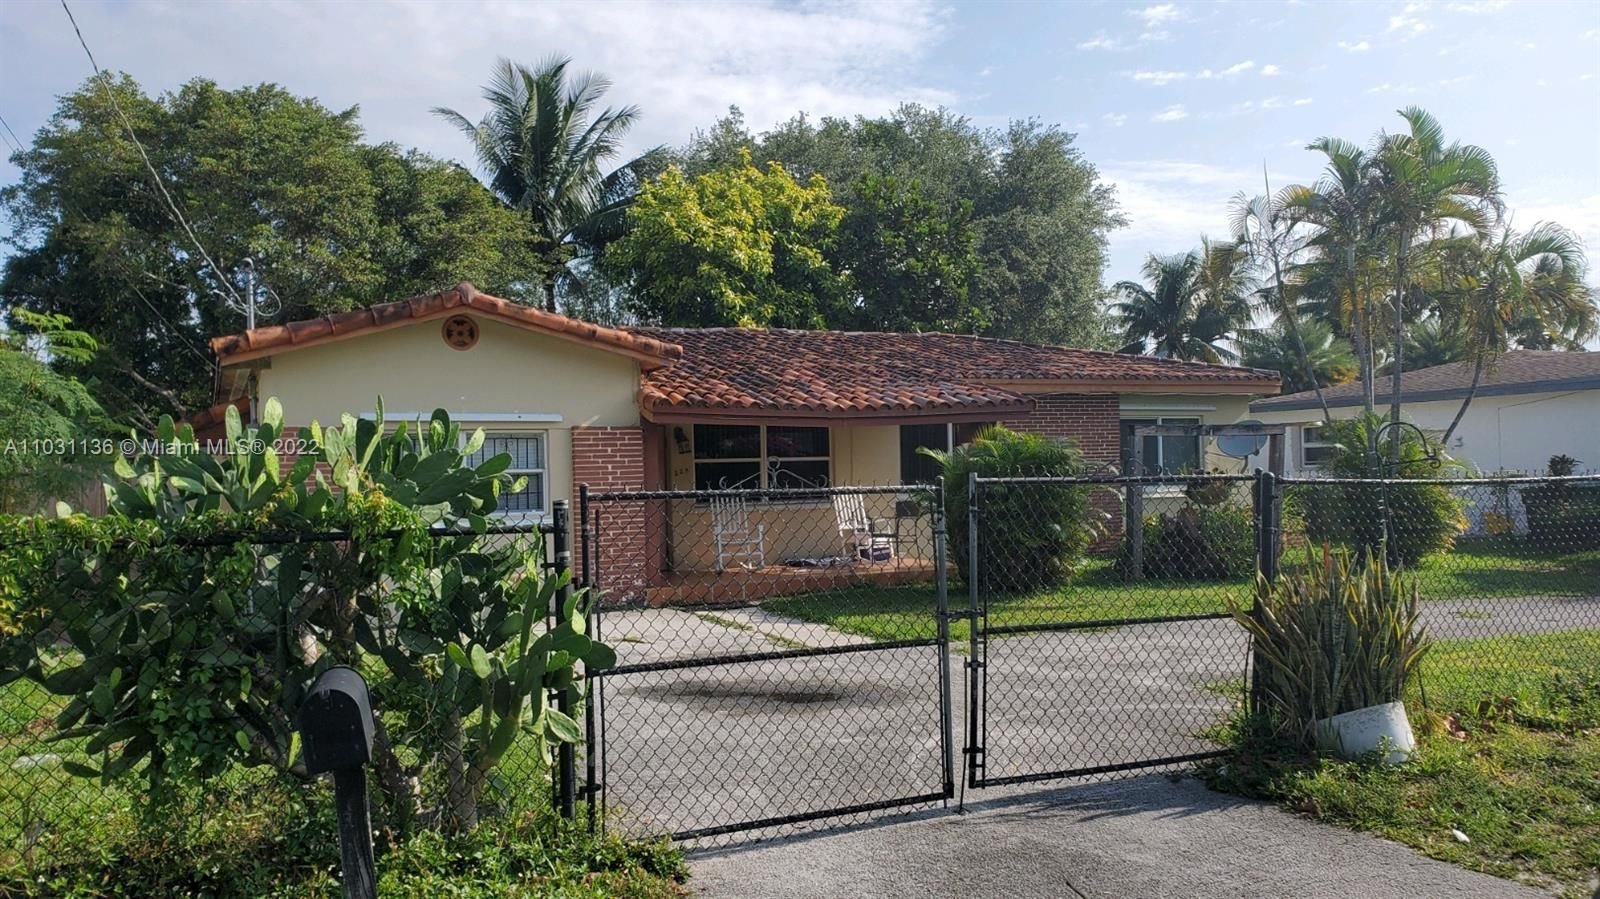 Real estate property located at 225 150th St, Miami-Dade County, Miami, FL